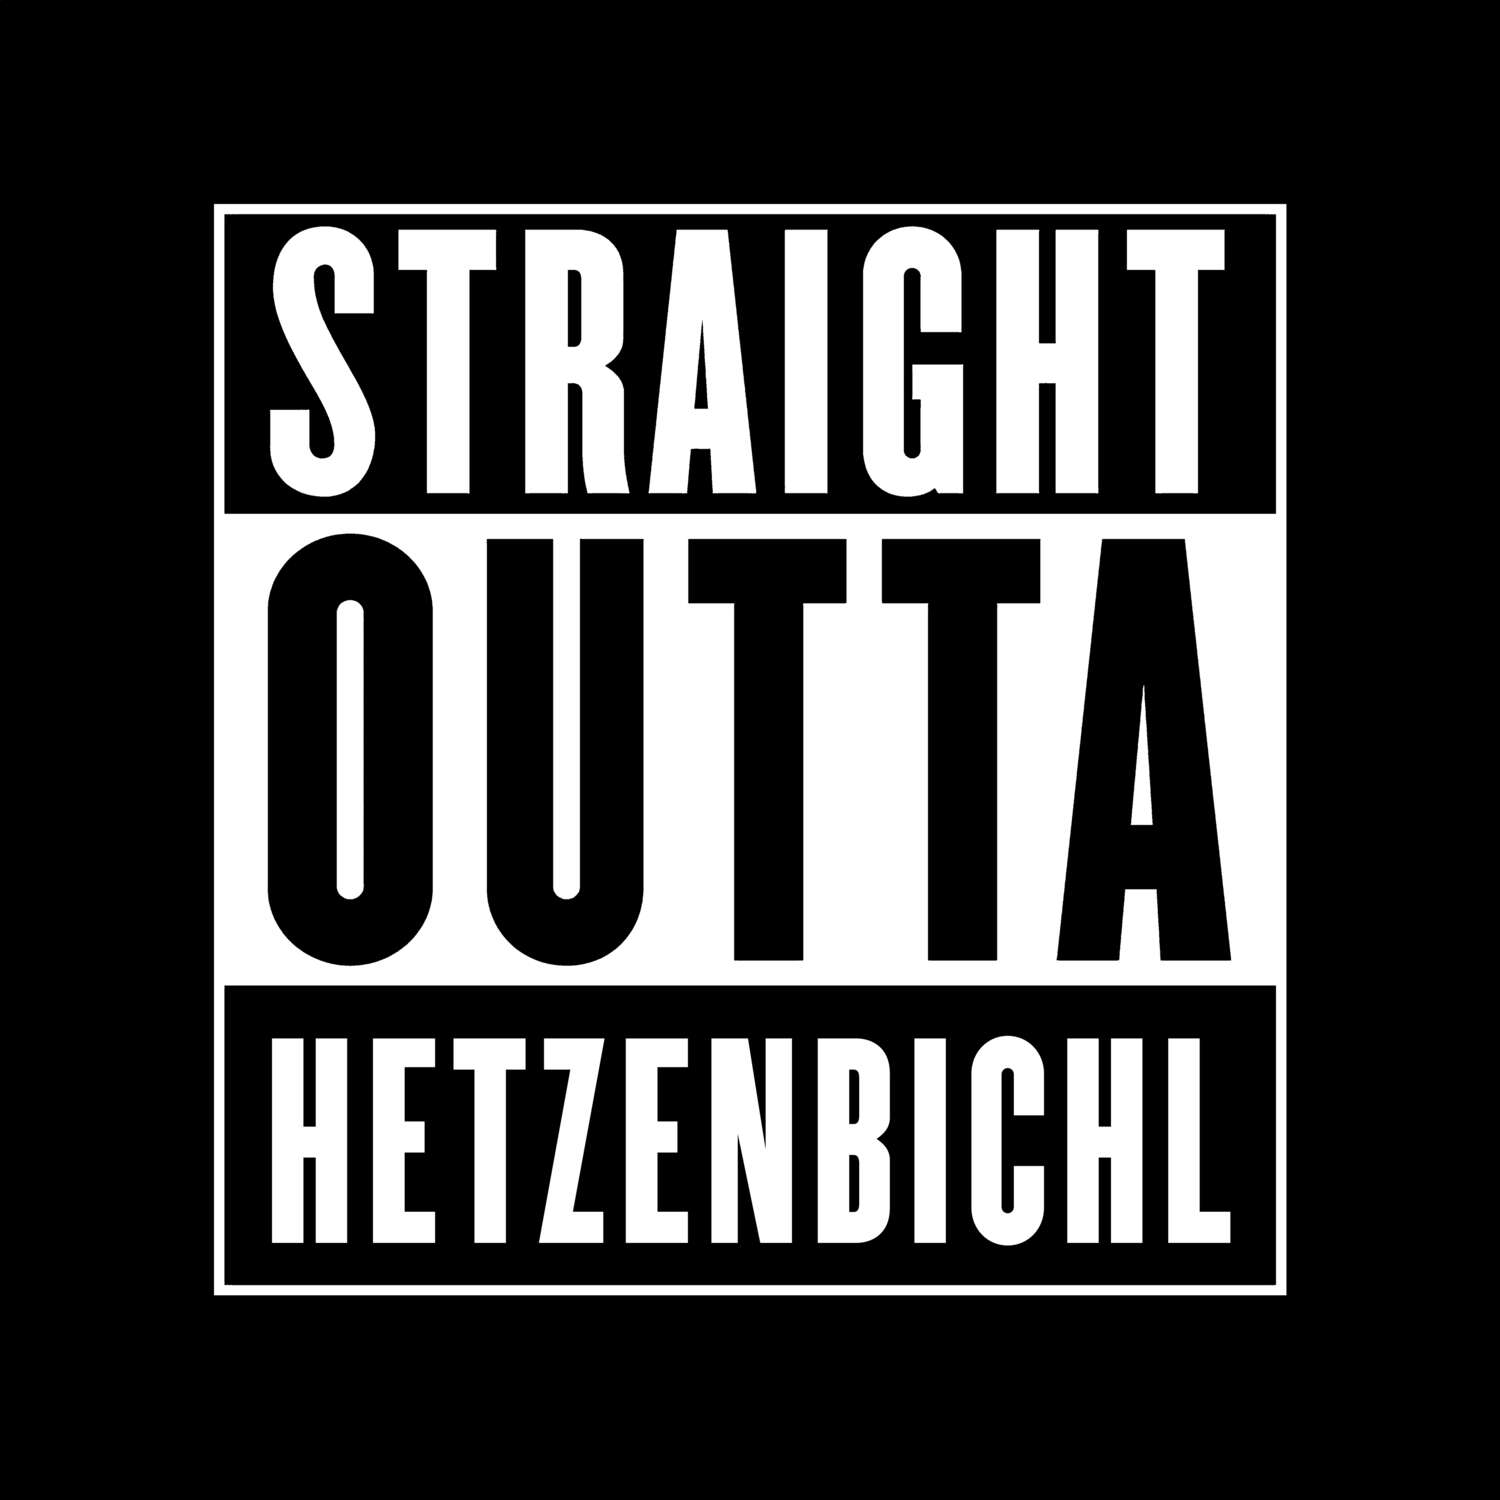 Hetzenbichl T-Shirt »Straight Outta«